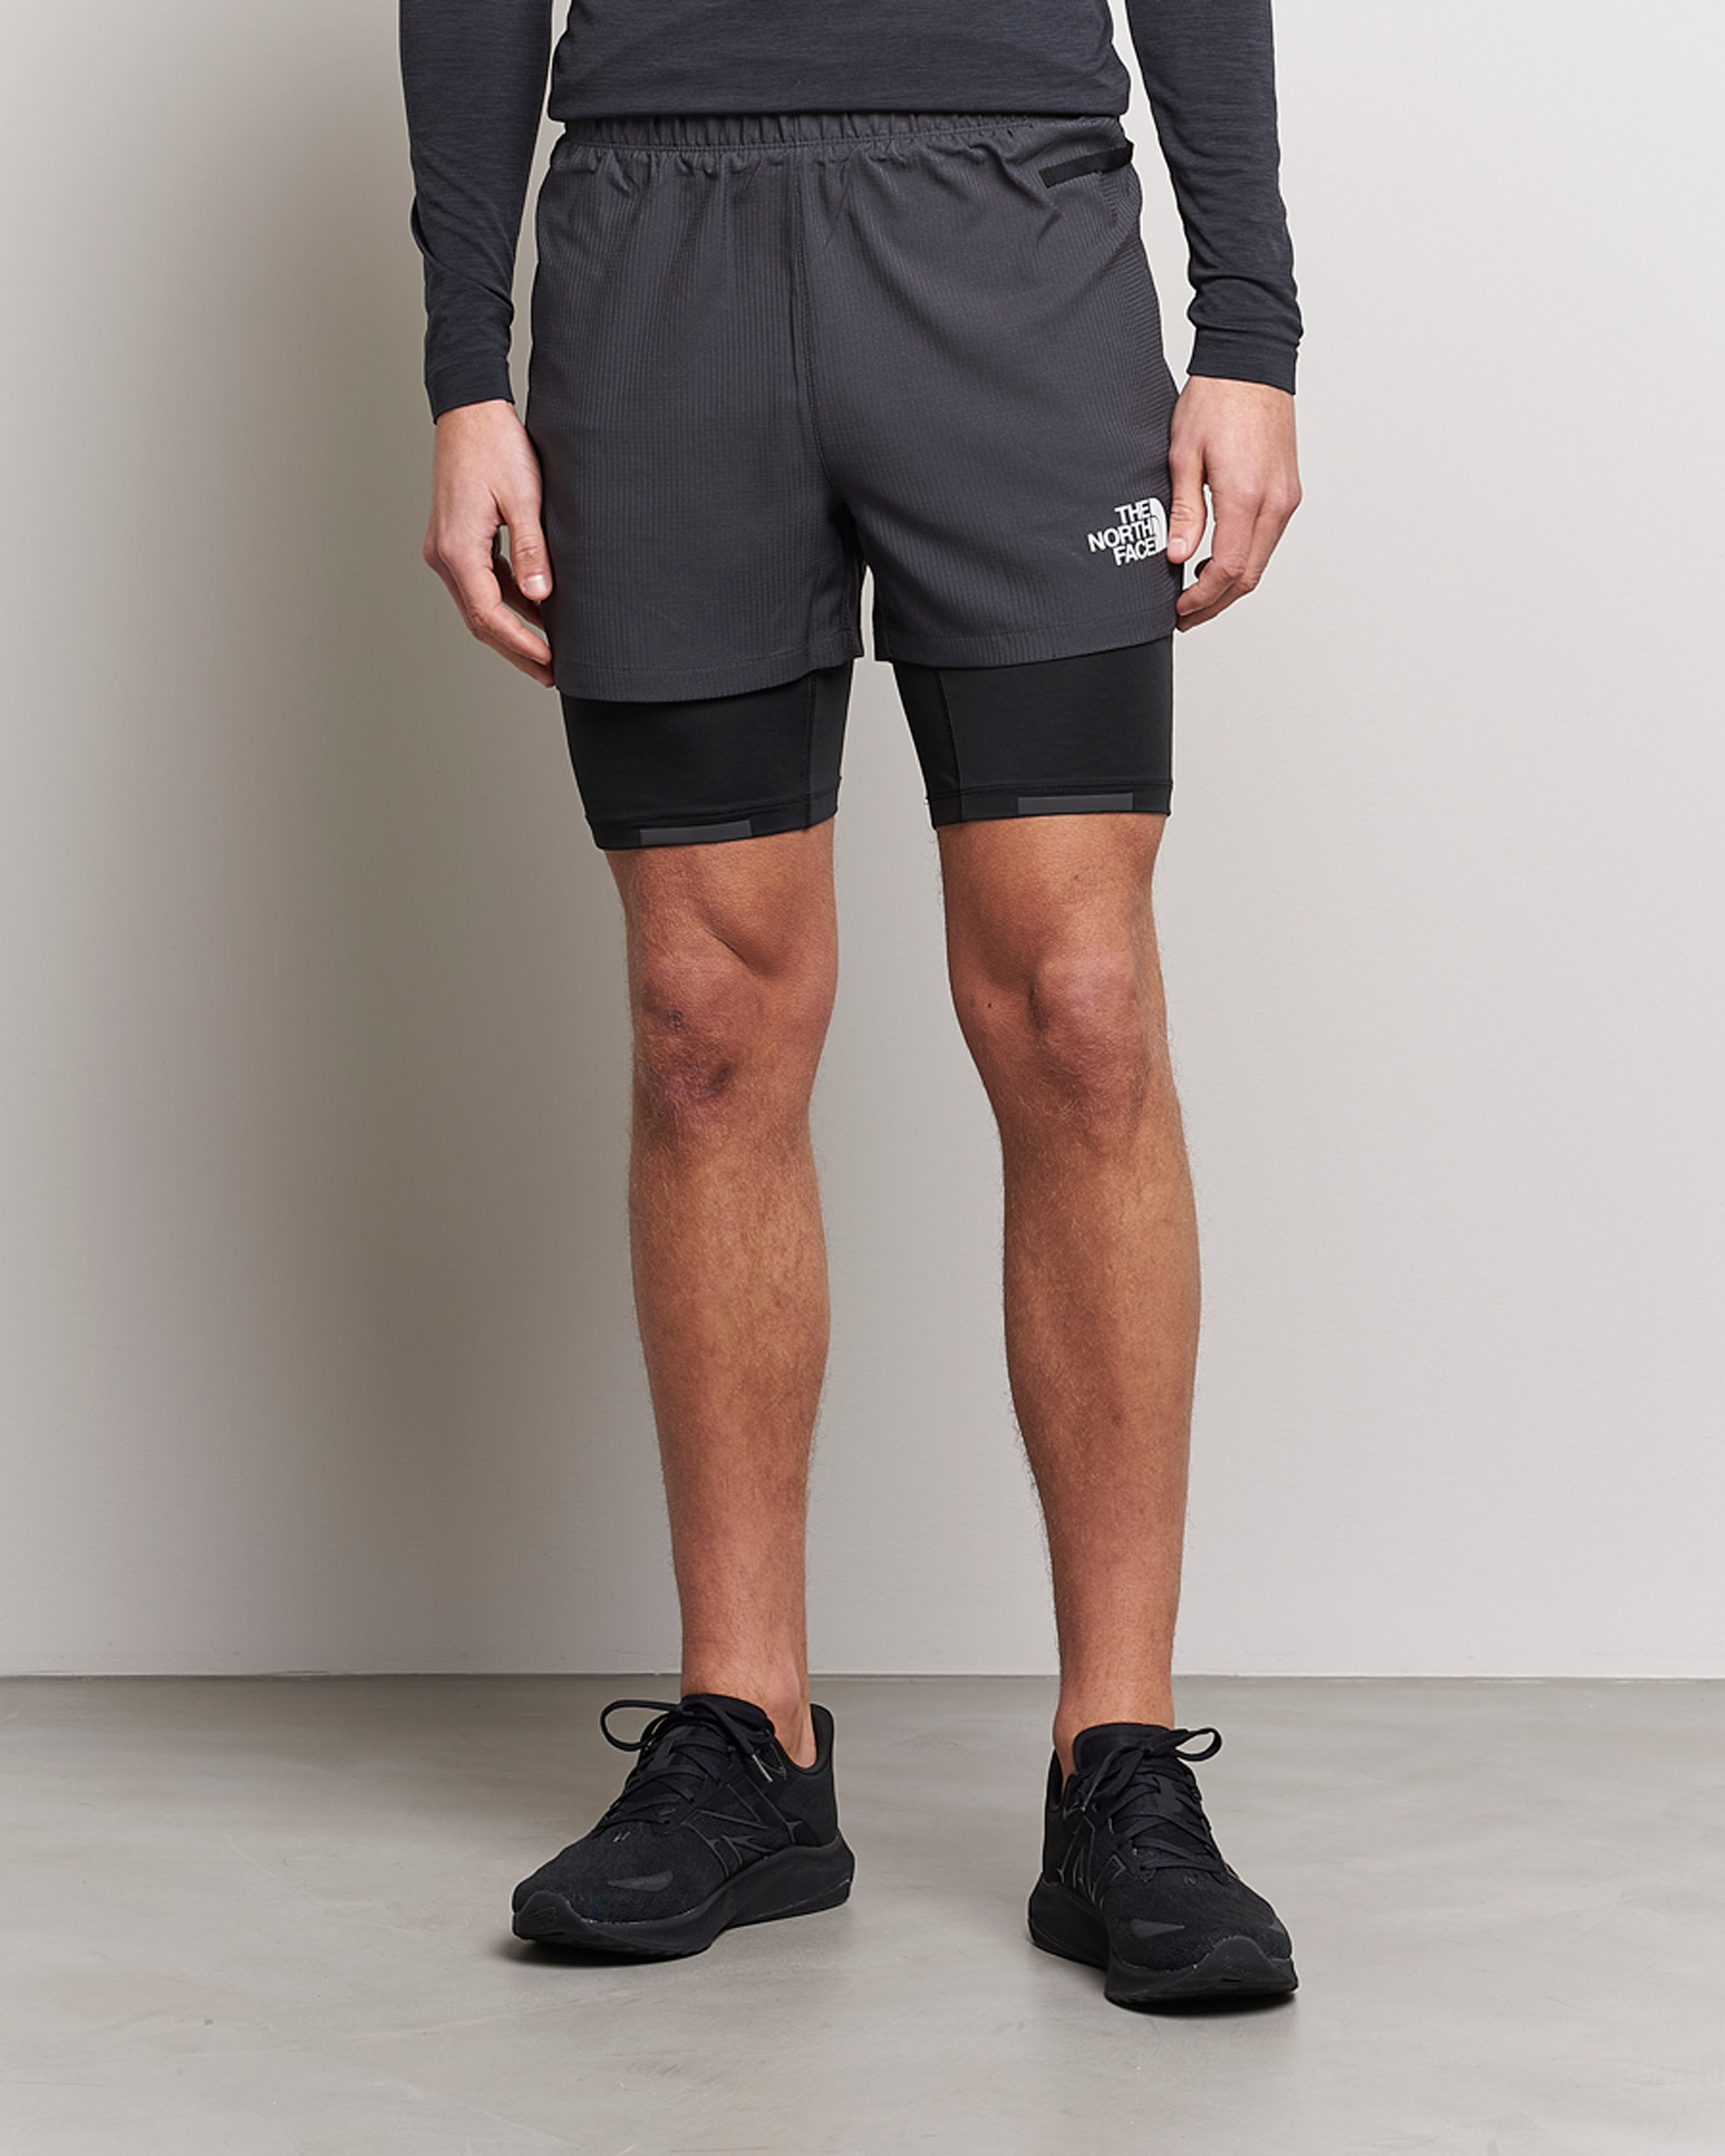 Men |  | The North Face | Mountain Athletics Dual Shorts Black/Asphalt